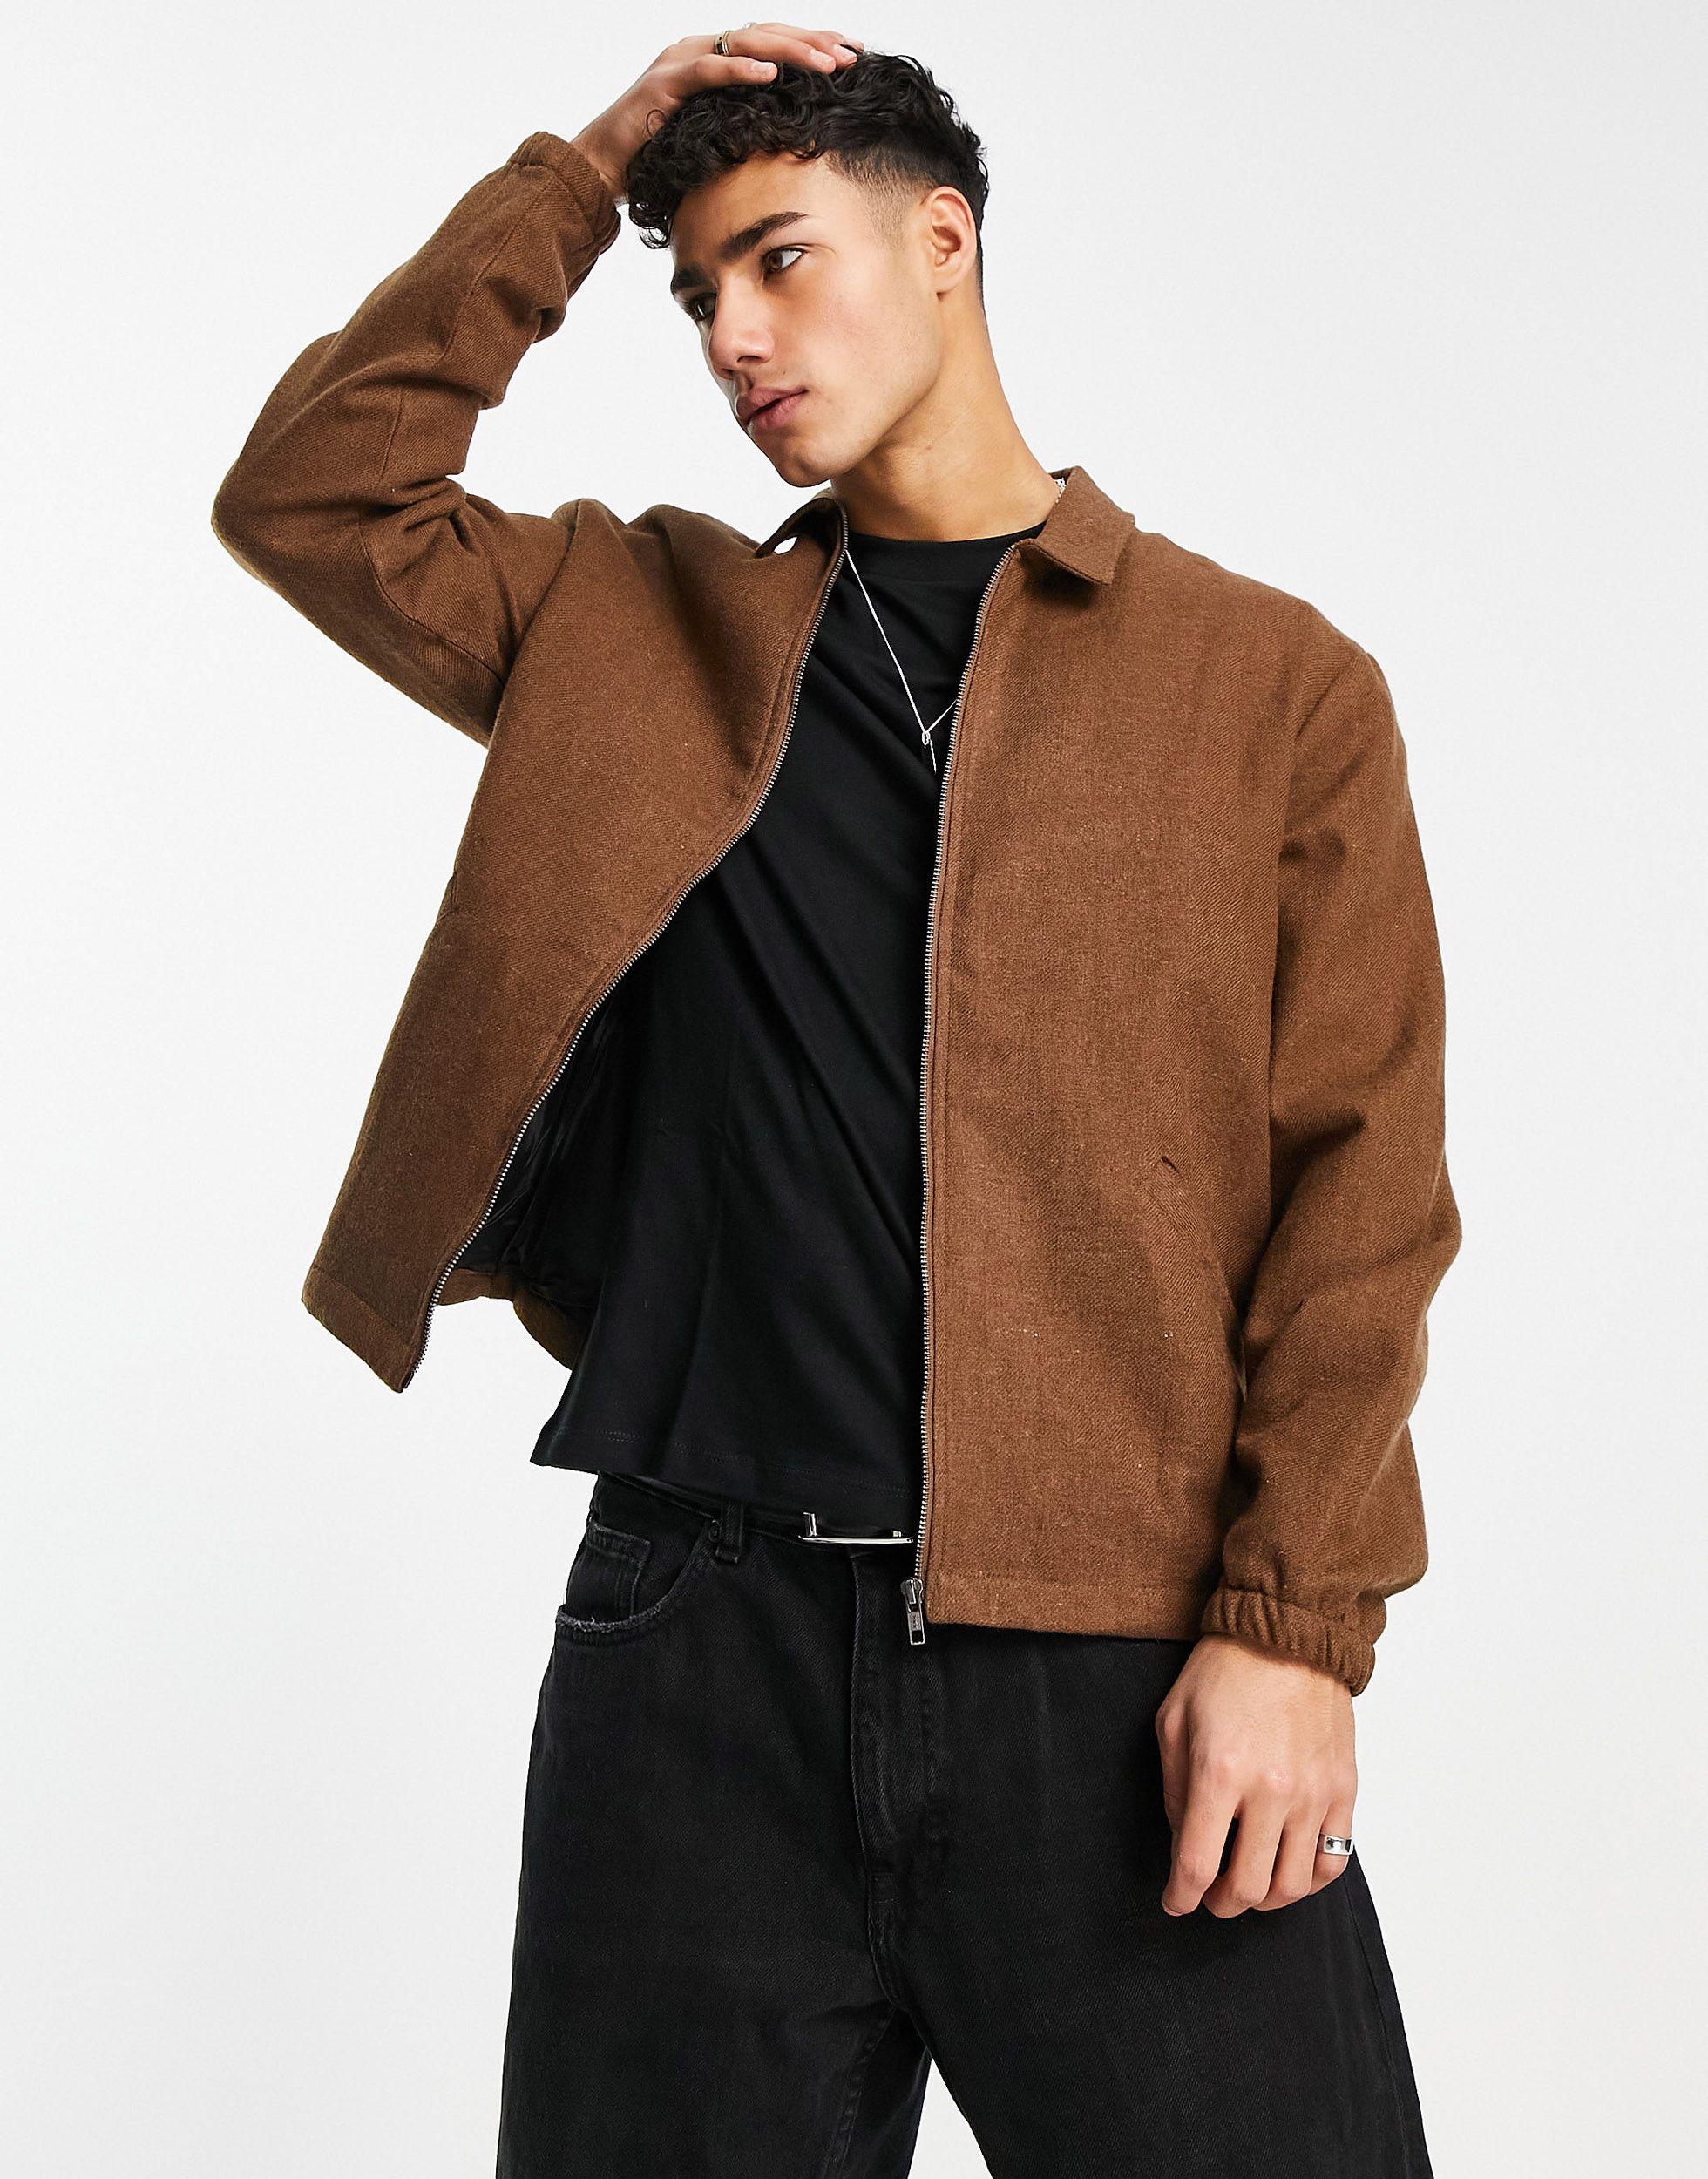 TOPMAN Flannel Harrington Jacket in Brown for Men